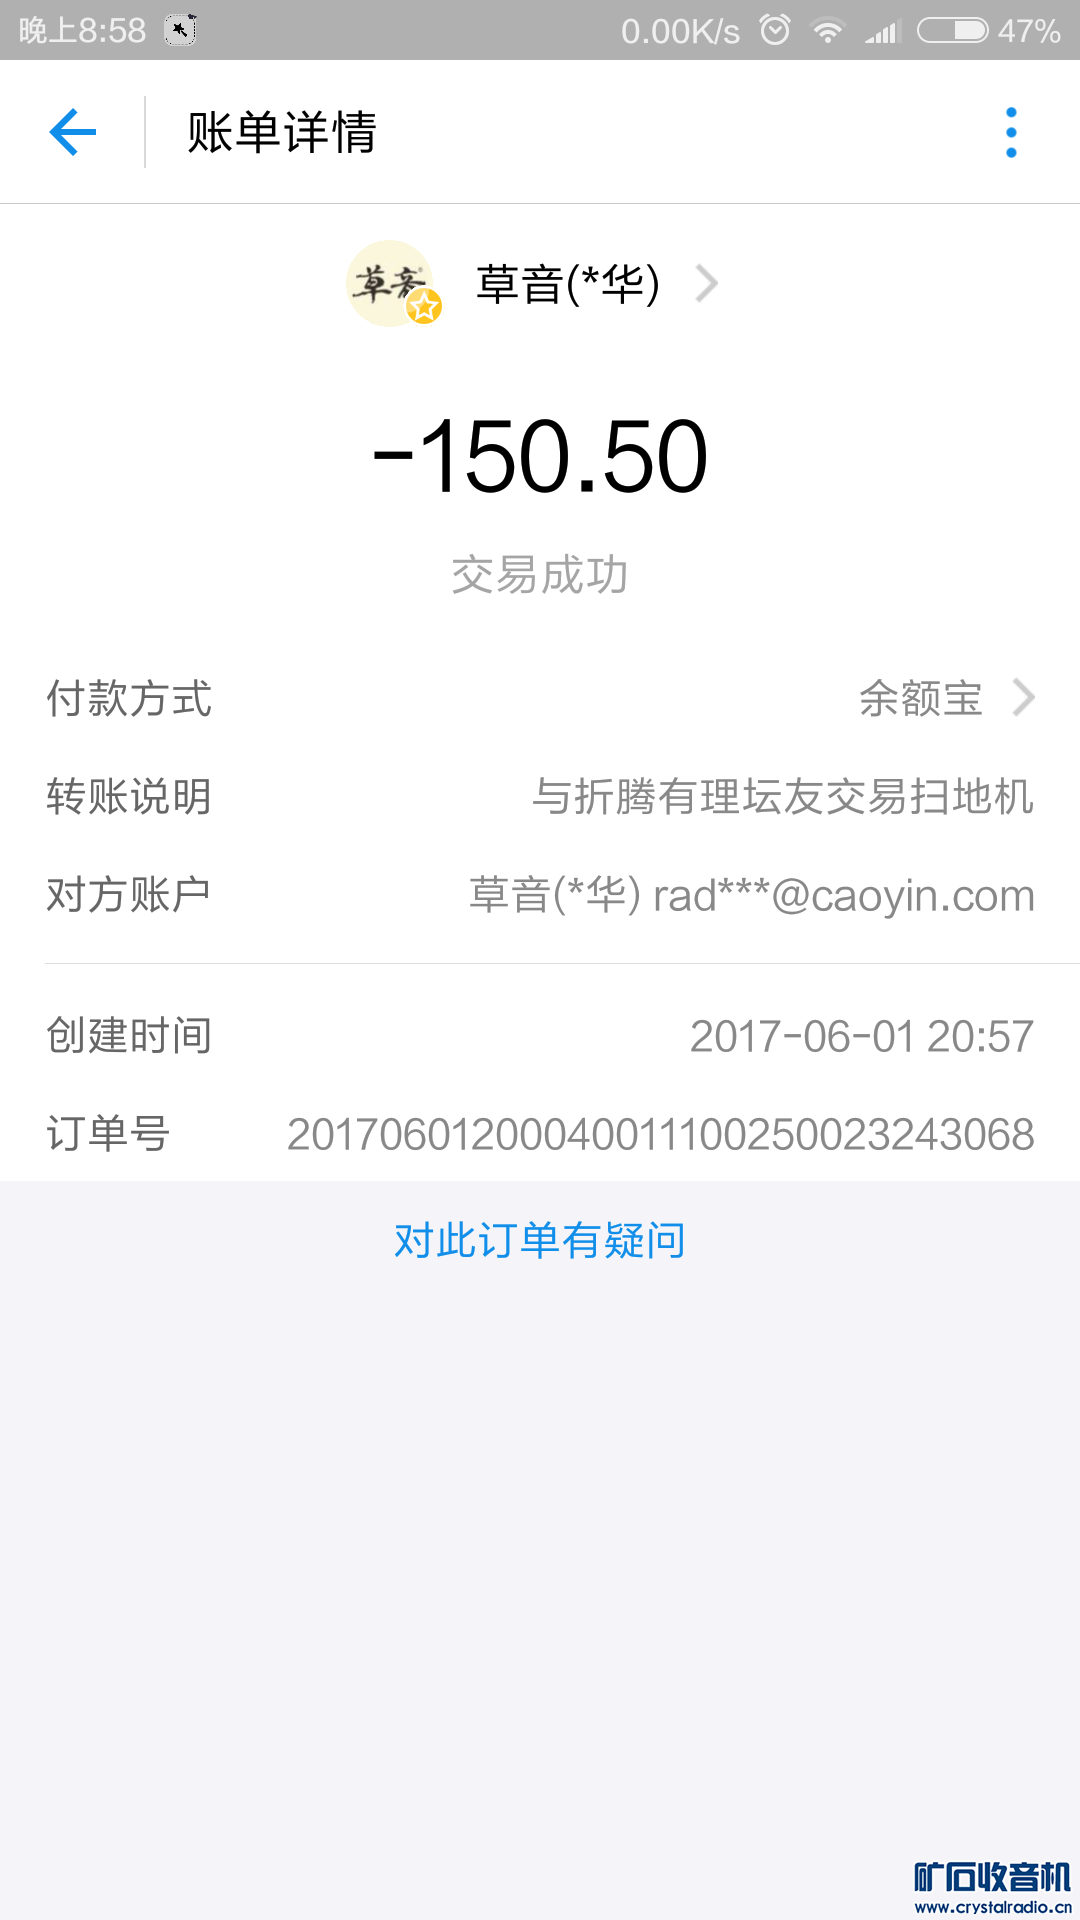 Screenshot_2017-06-01-20-58-22_com.eg.android.AlipayGphone.png